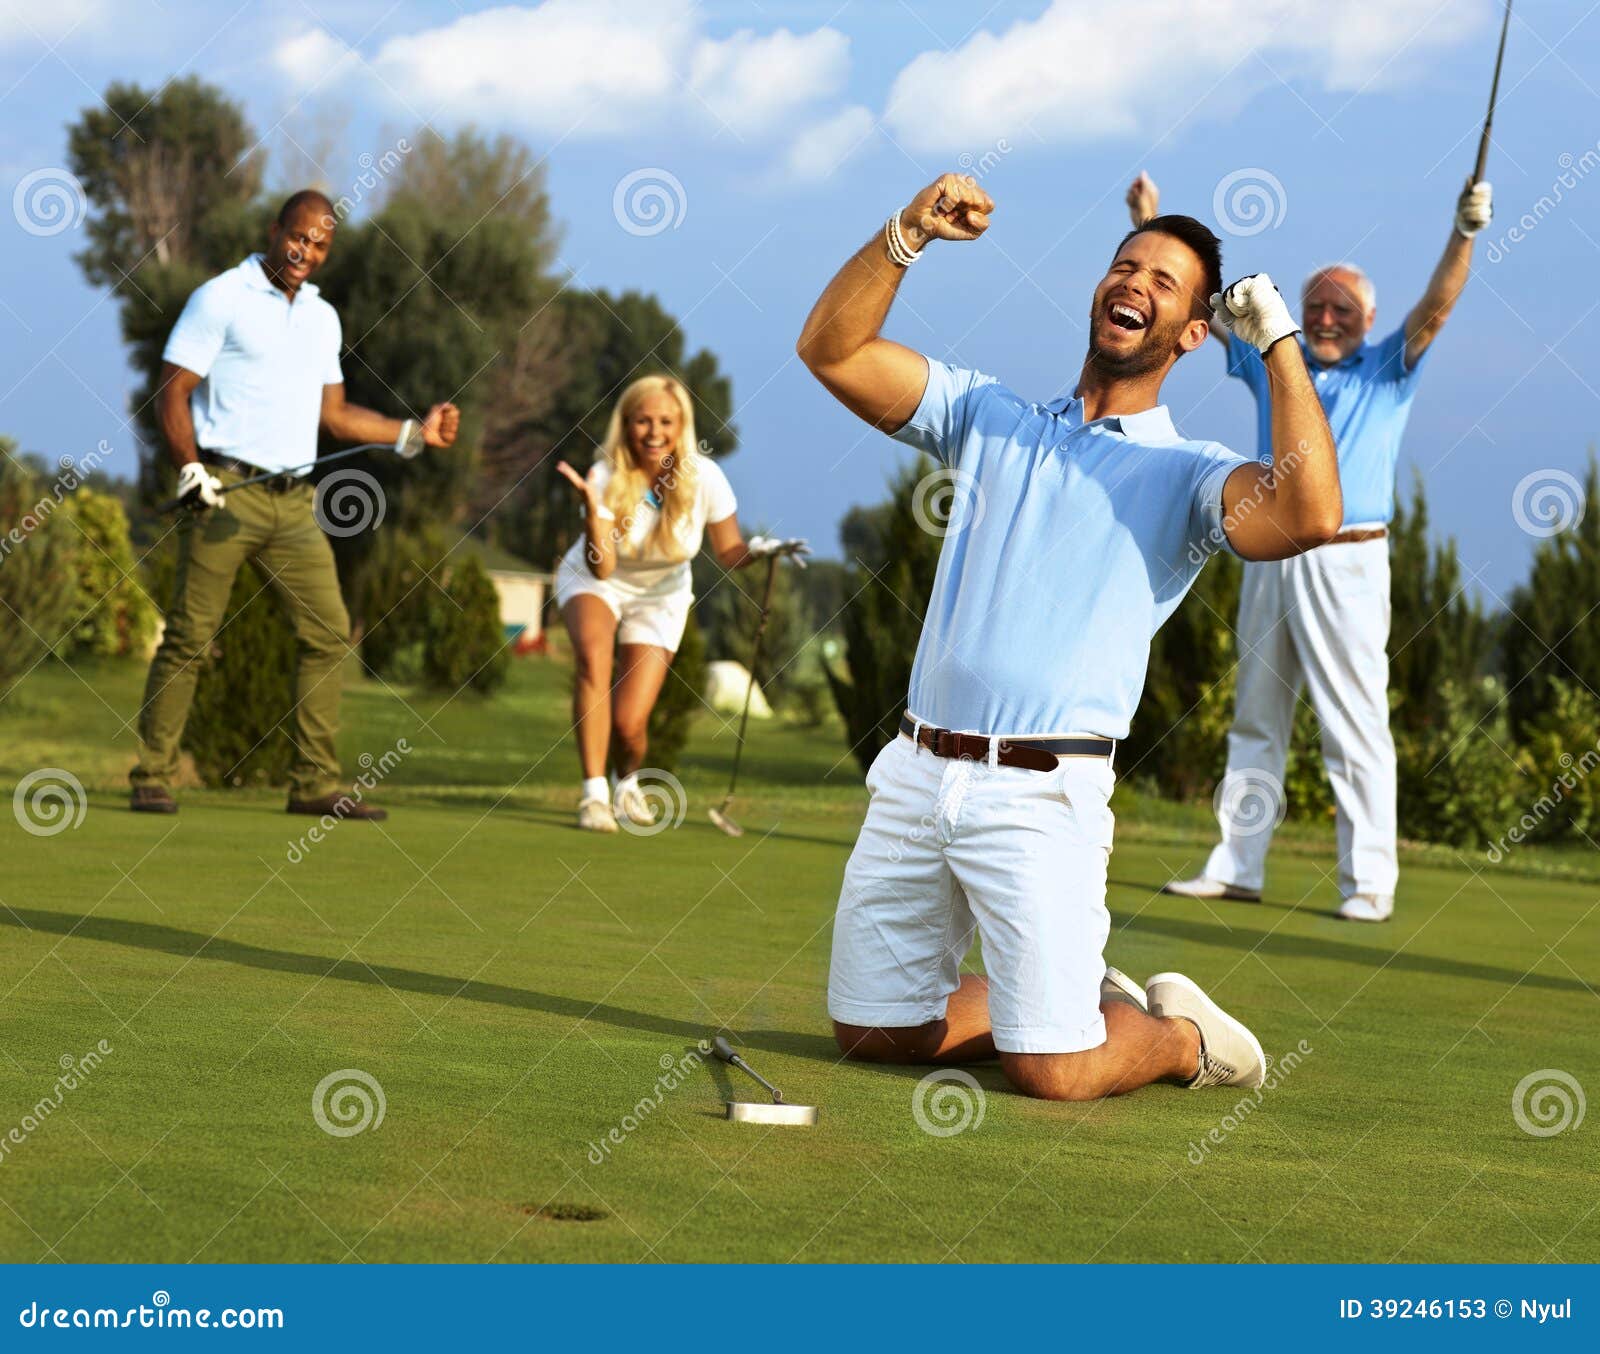 happy golfer in flush of victory